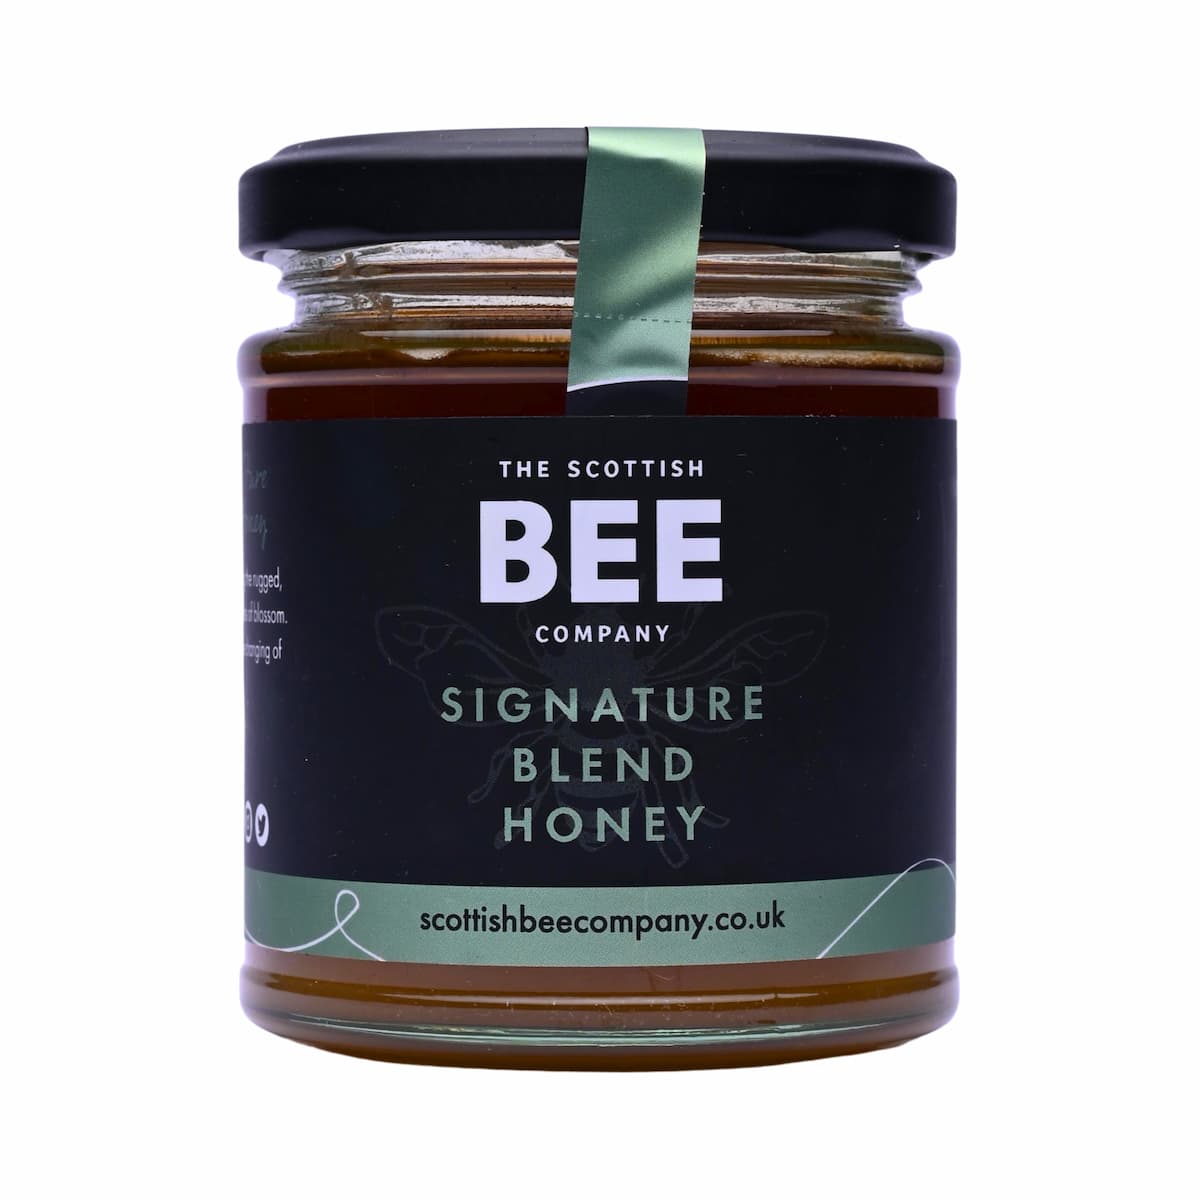 Signature Blend Honey